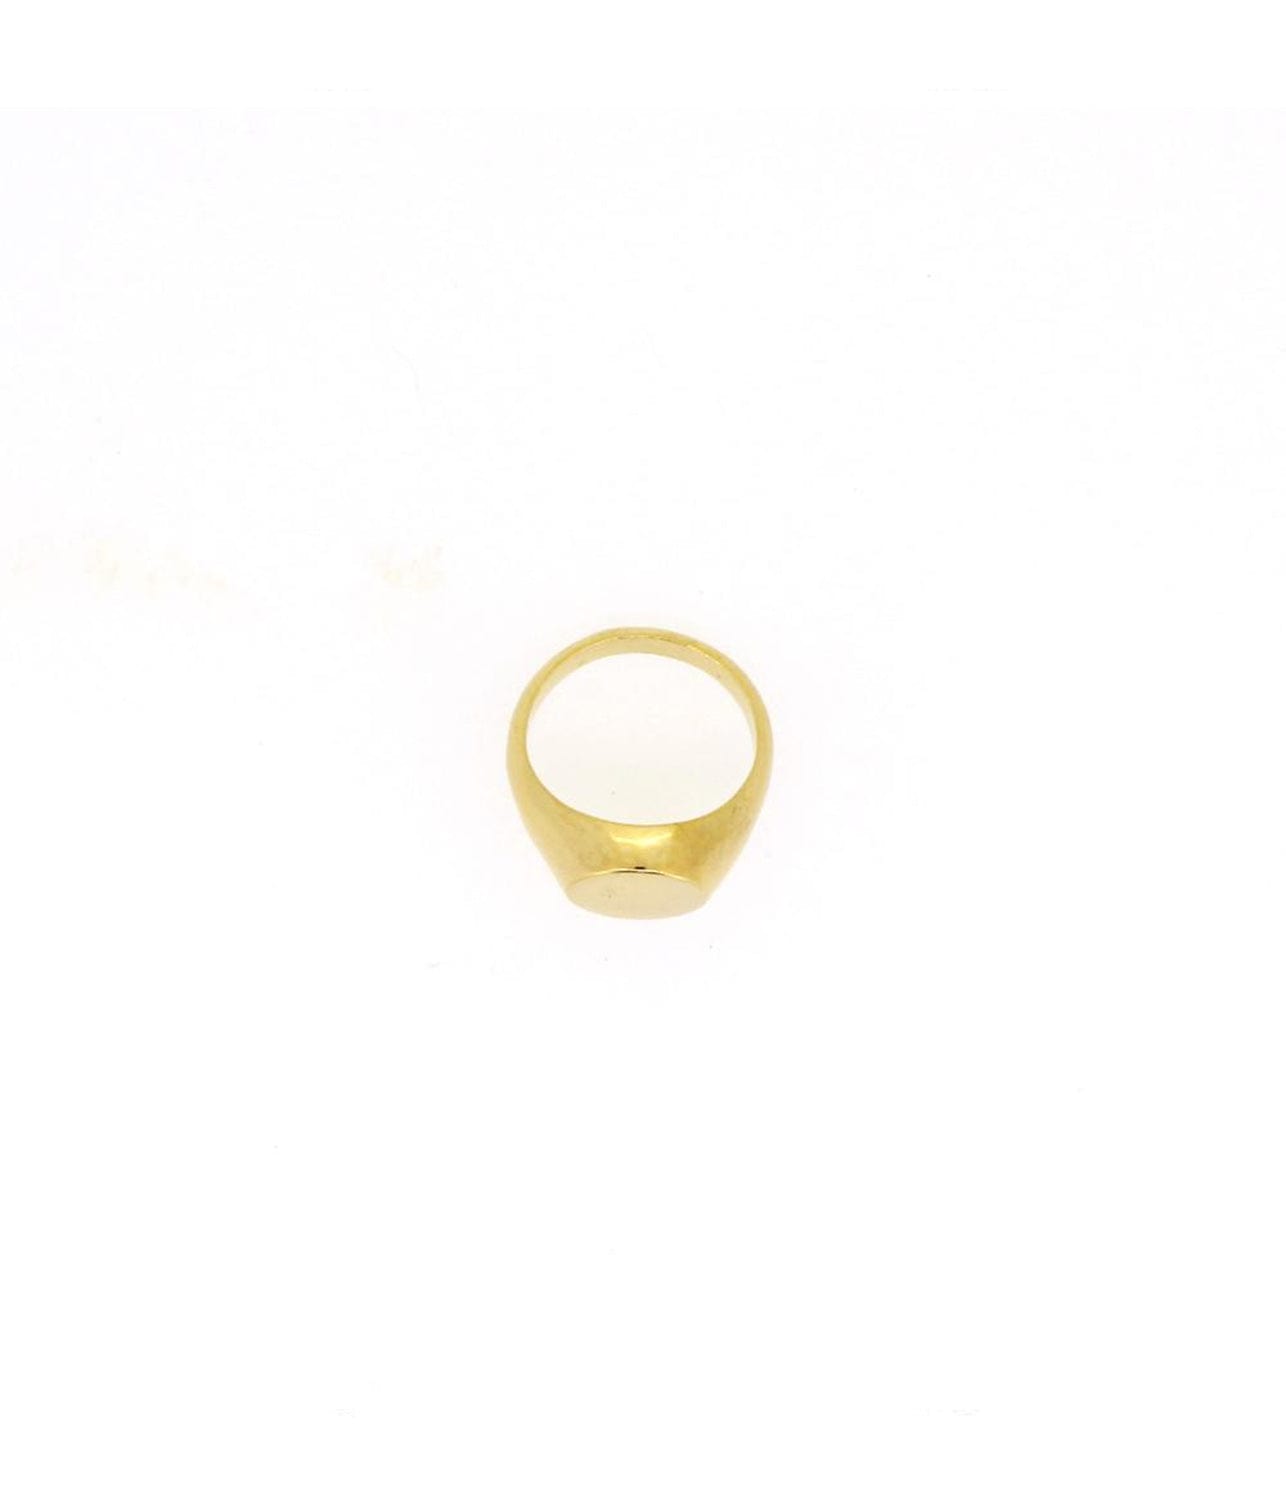 SMALL SIGNET RING - GOLD | HOLLY RYAN HOLLY RYAN SMALL SIGNET RING - GOLD